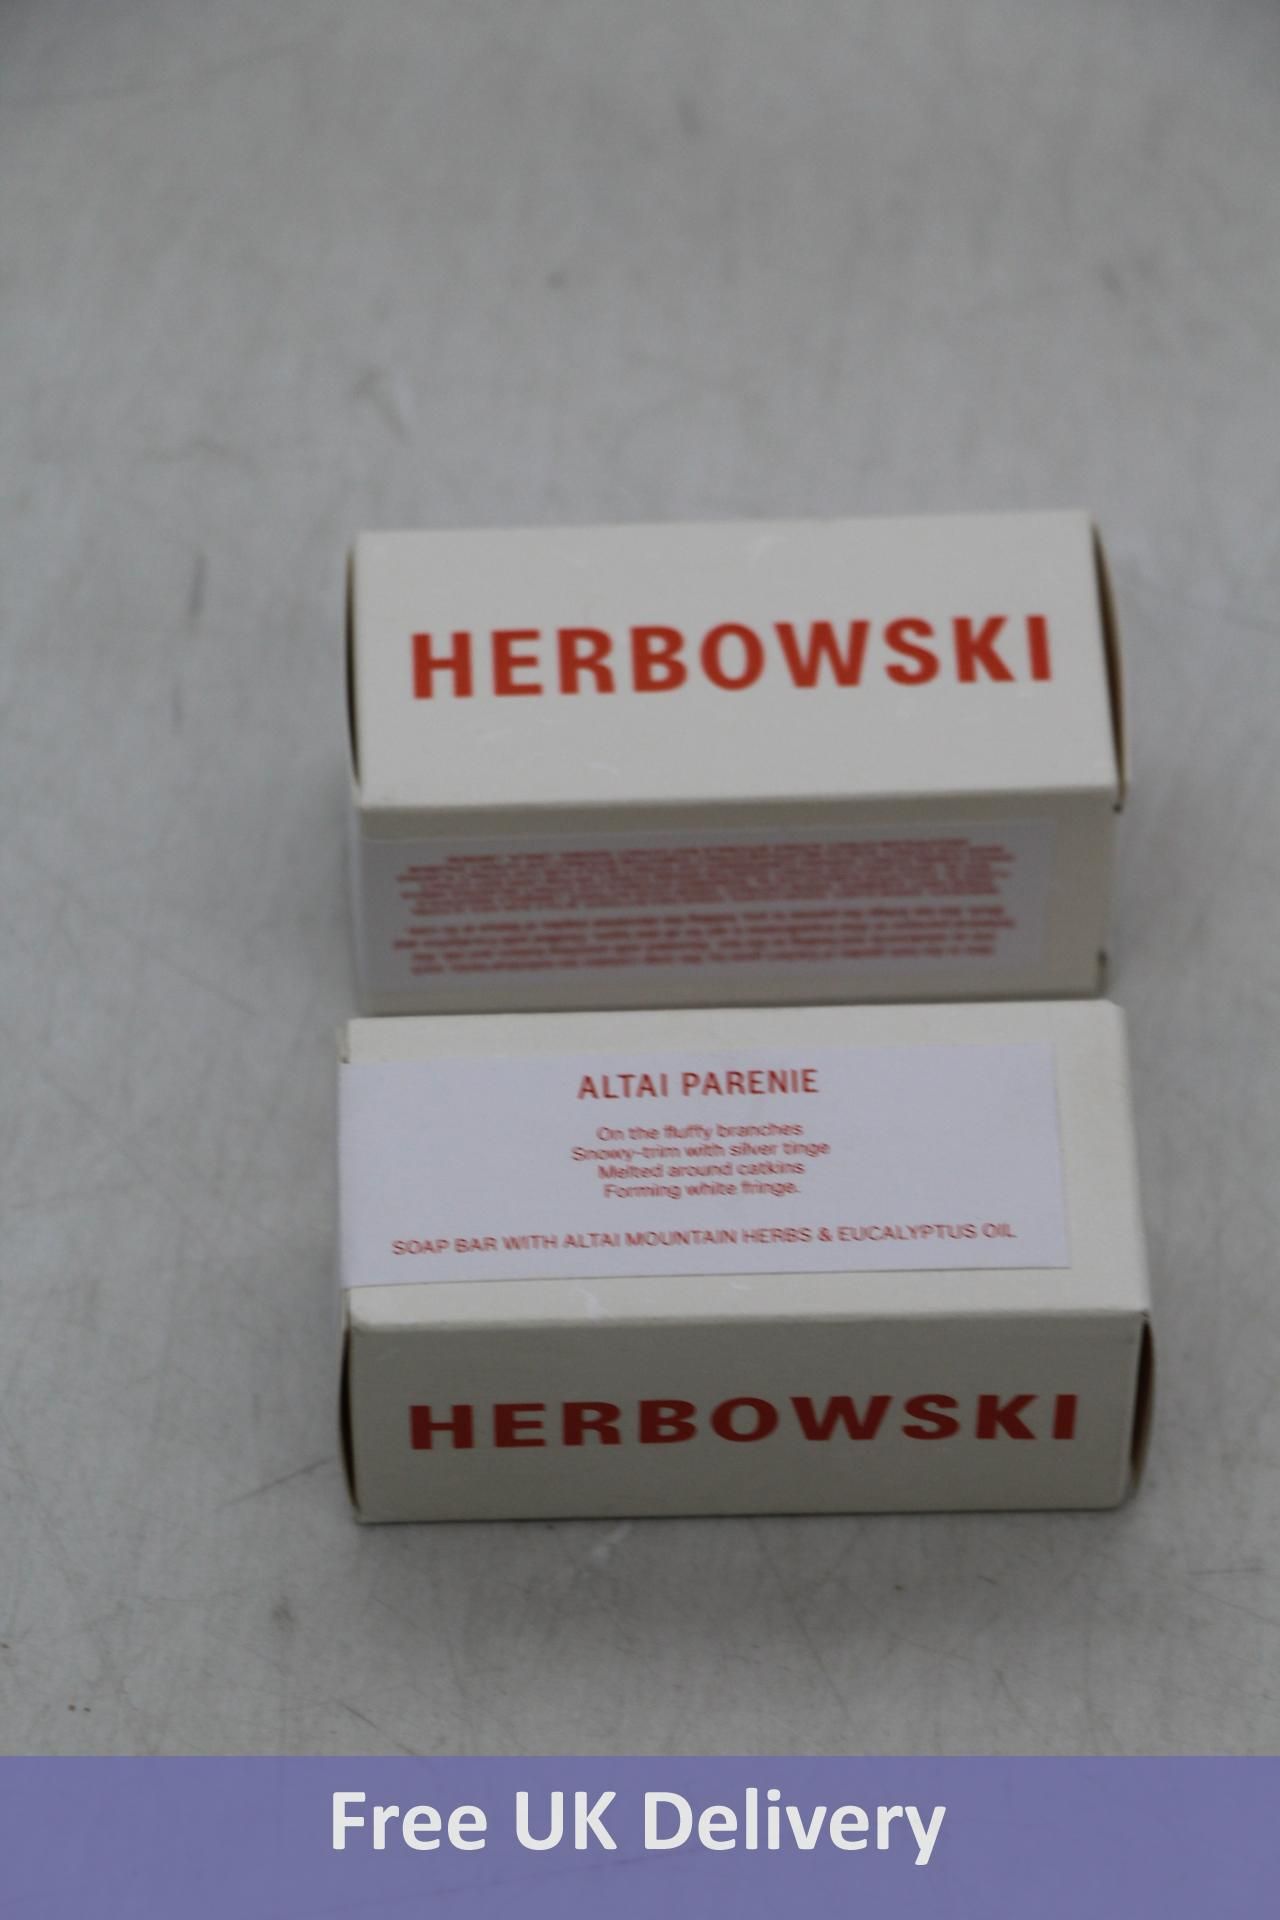 Nine Herbowski Altai Parenie Cleansing Soap Bars